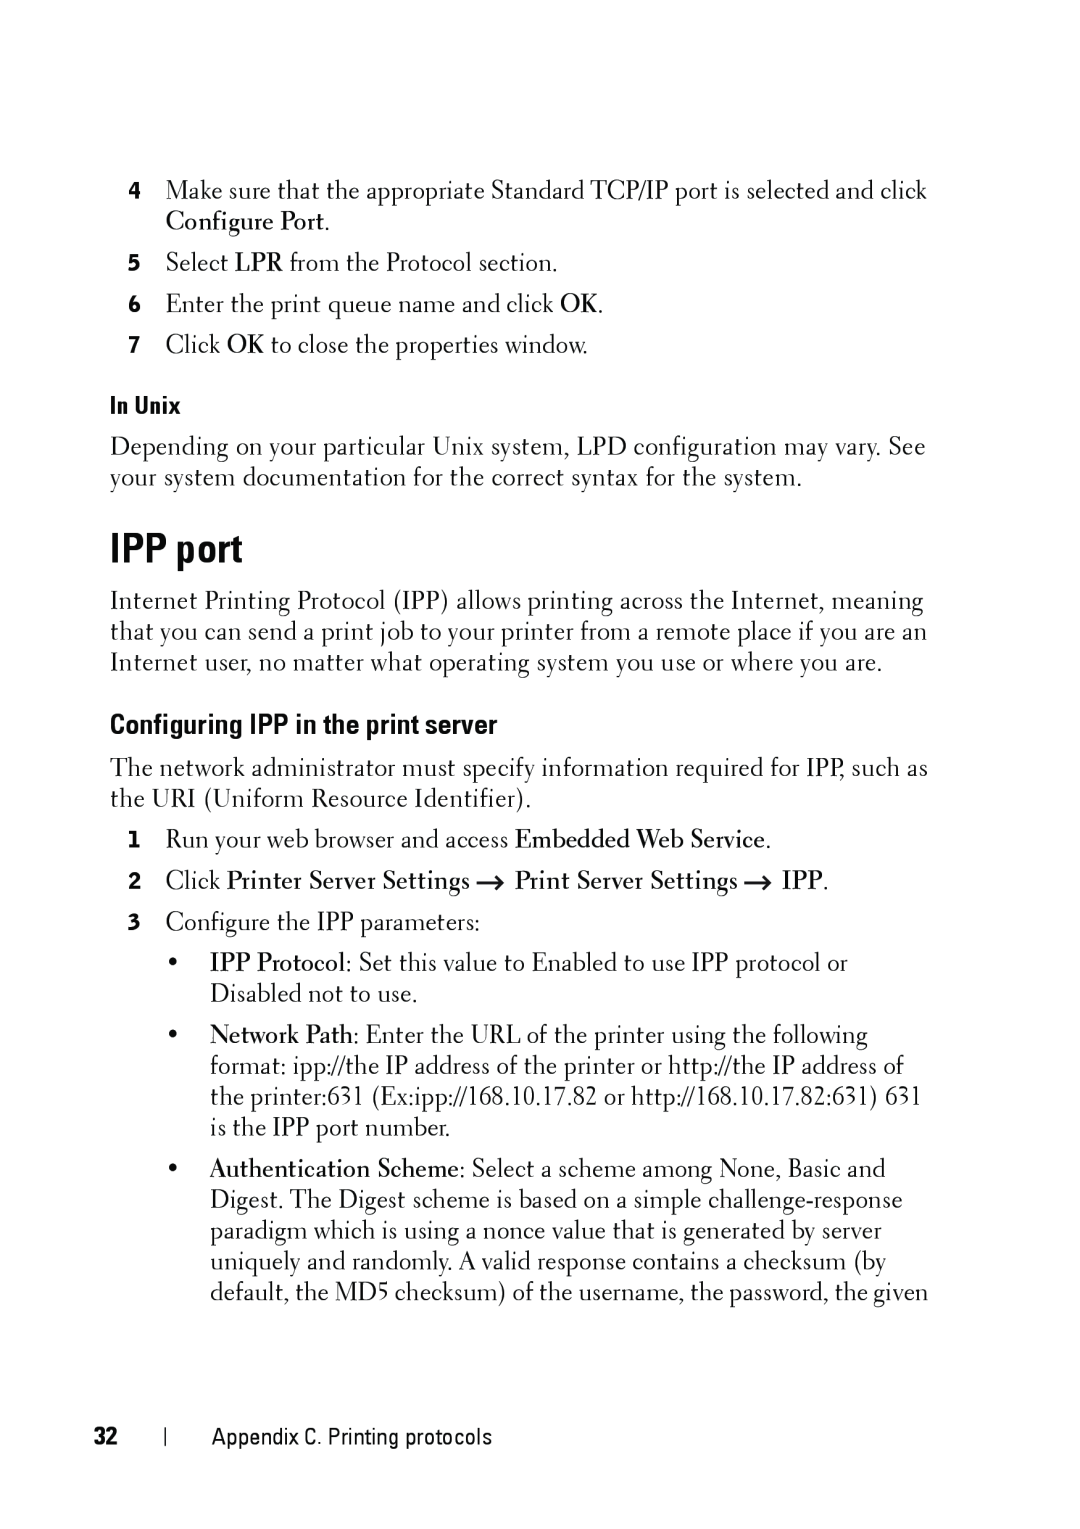 Dell 5002 IPP port, Configuring IPP in the print server, In Unix, Click Printer Server Settings Print Server Settings IPP 